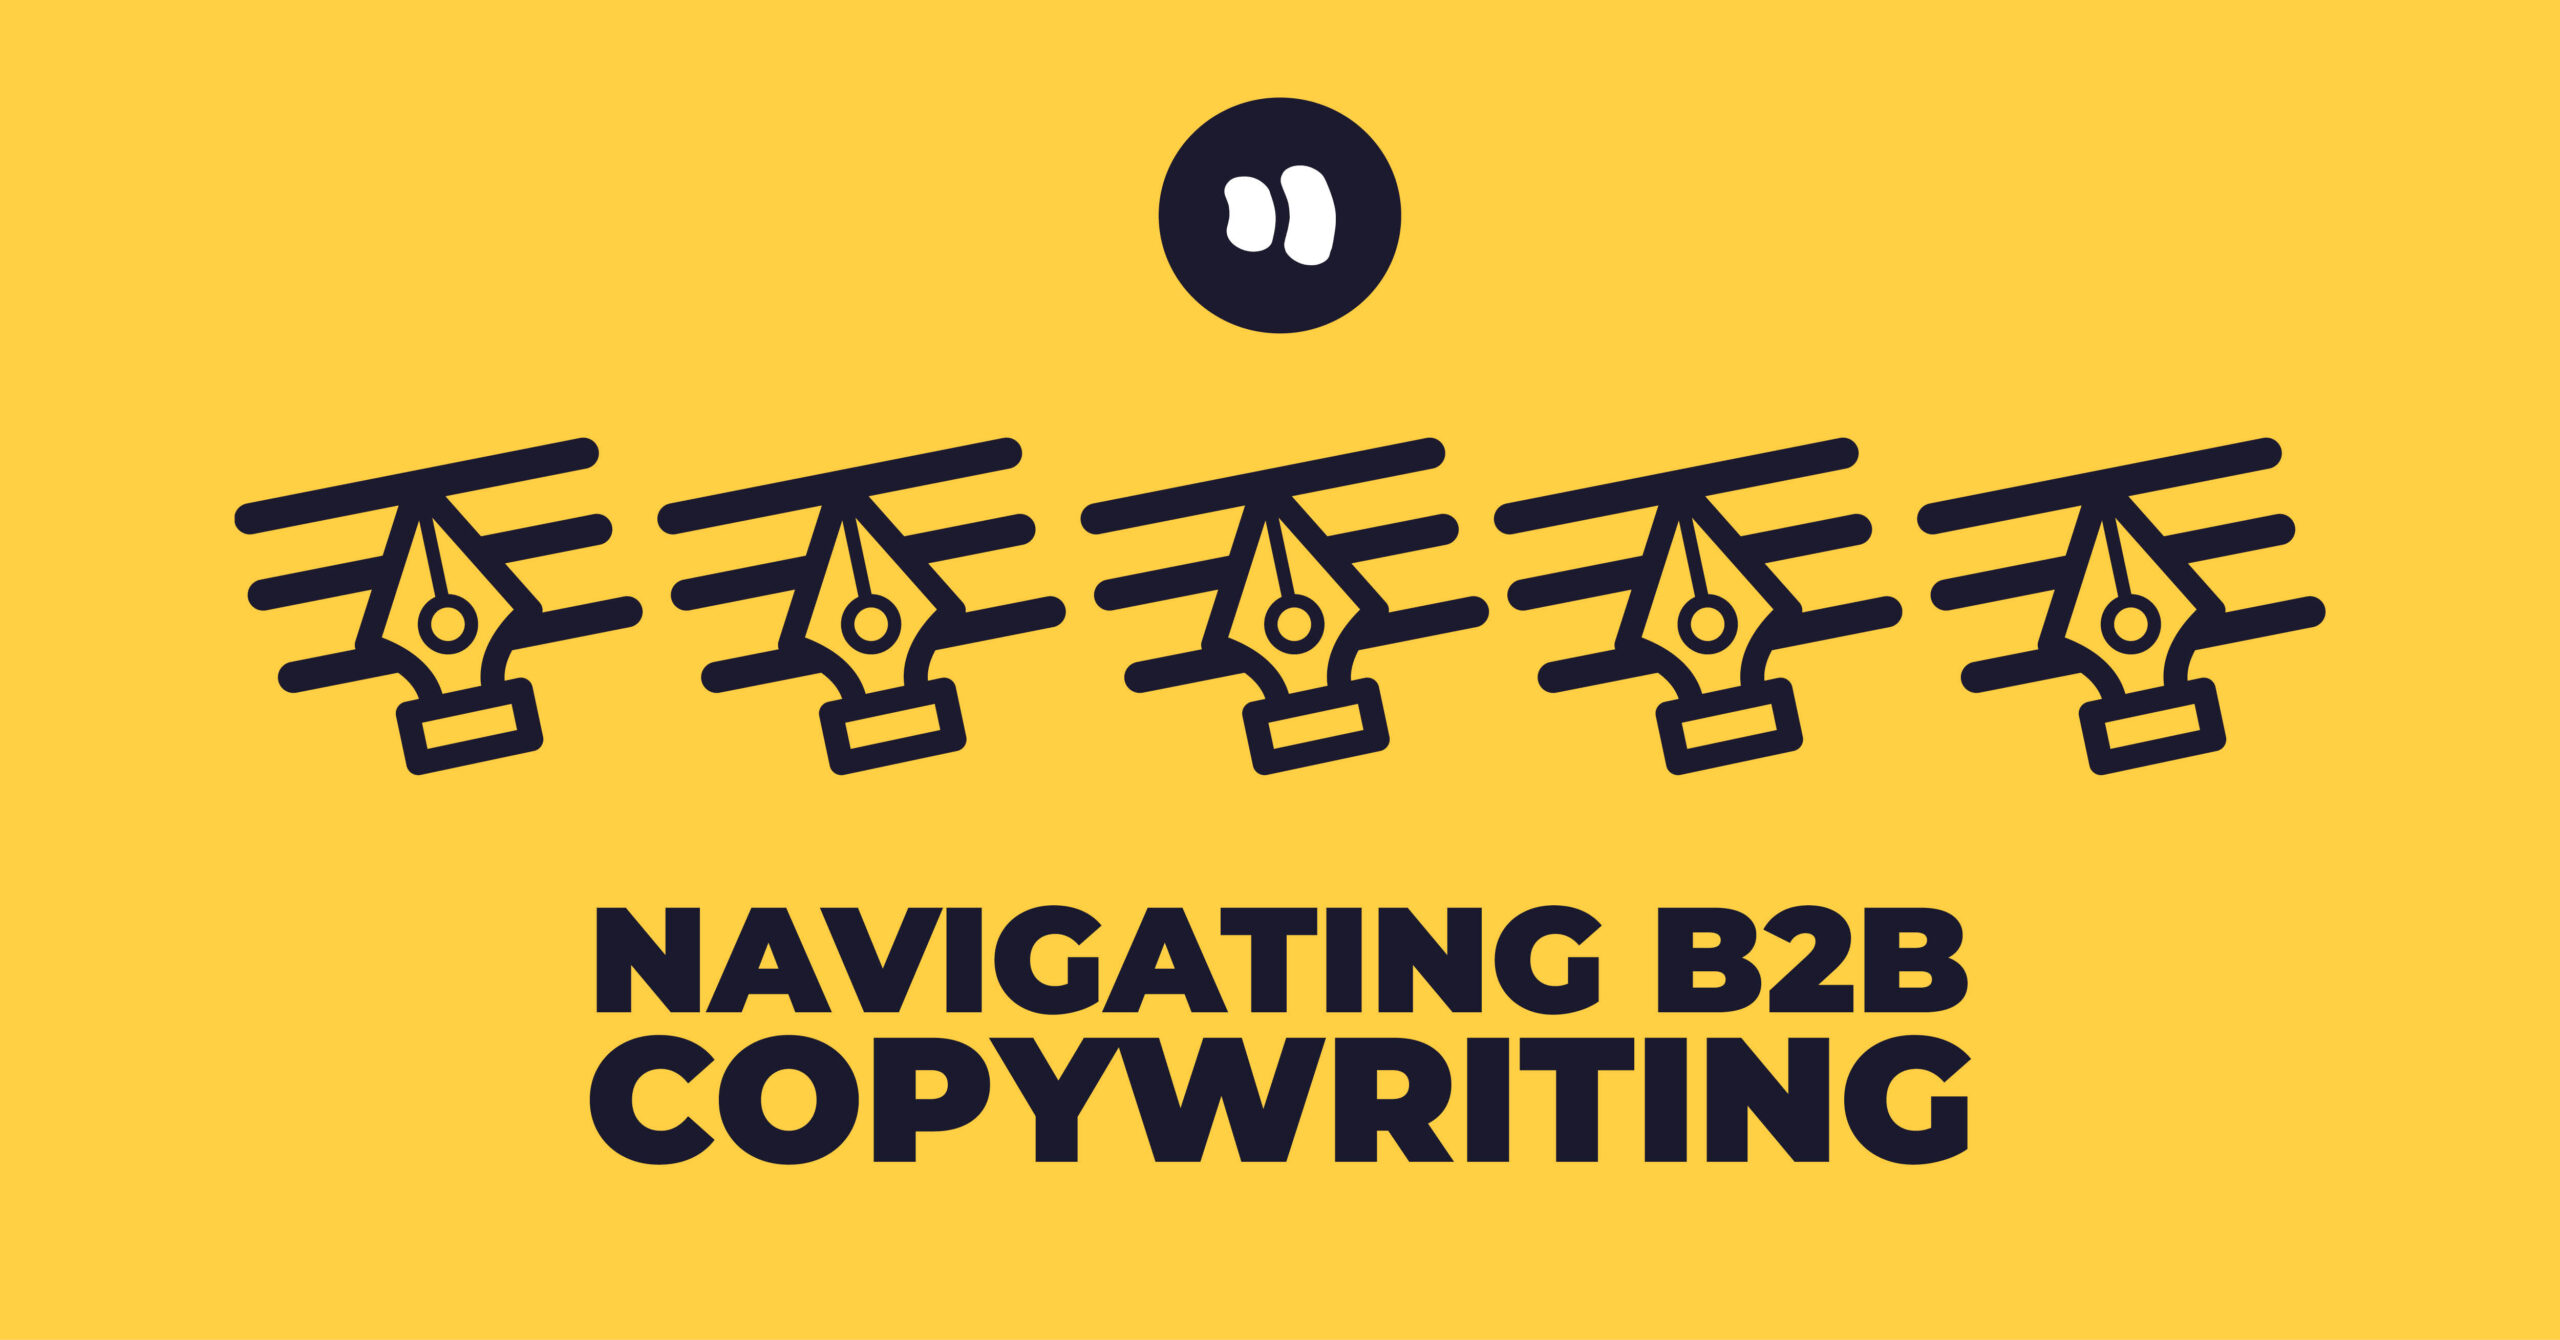 How to navigate the perils of B2B copywriting